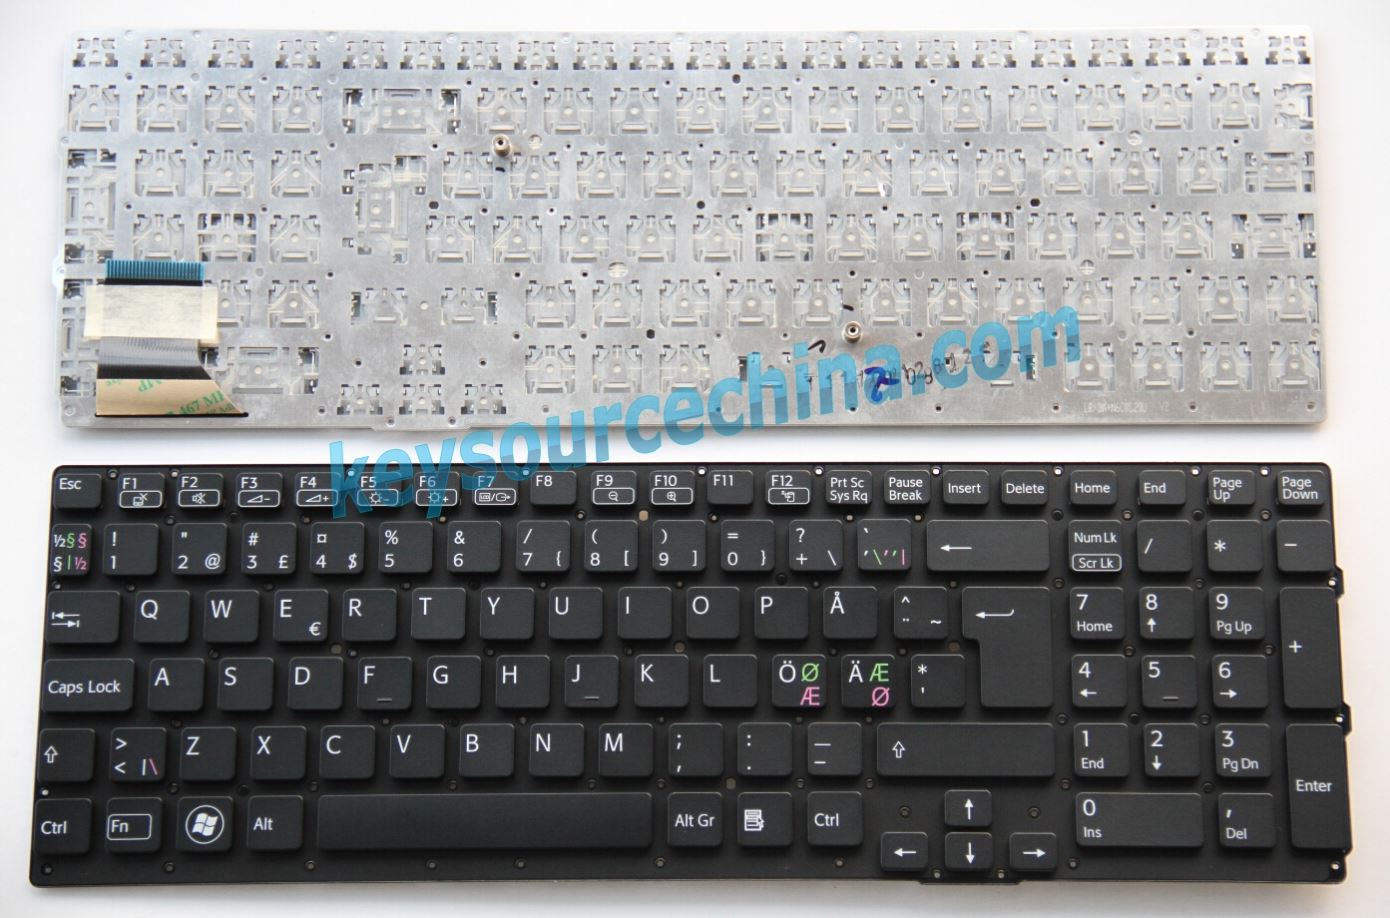 9Z.N6CBF.31N Nordic Keyboard,550120AL2G2-035-G Nordic Keyboard,PN:148986771 Nordic Keyboard,Sony Vaio VPC-SE1 Nordic Keyboard